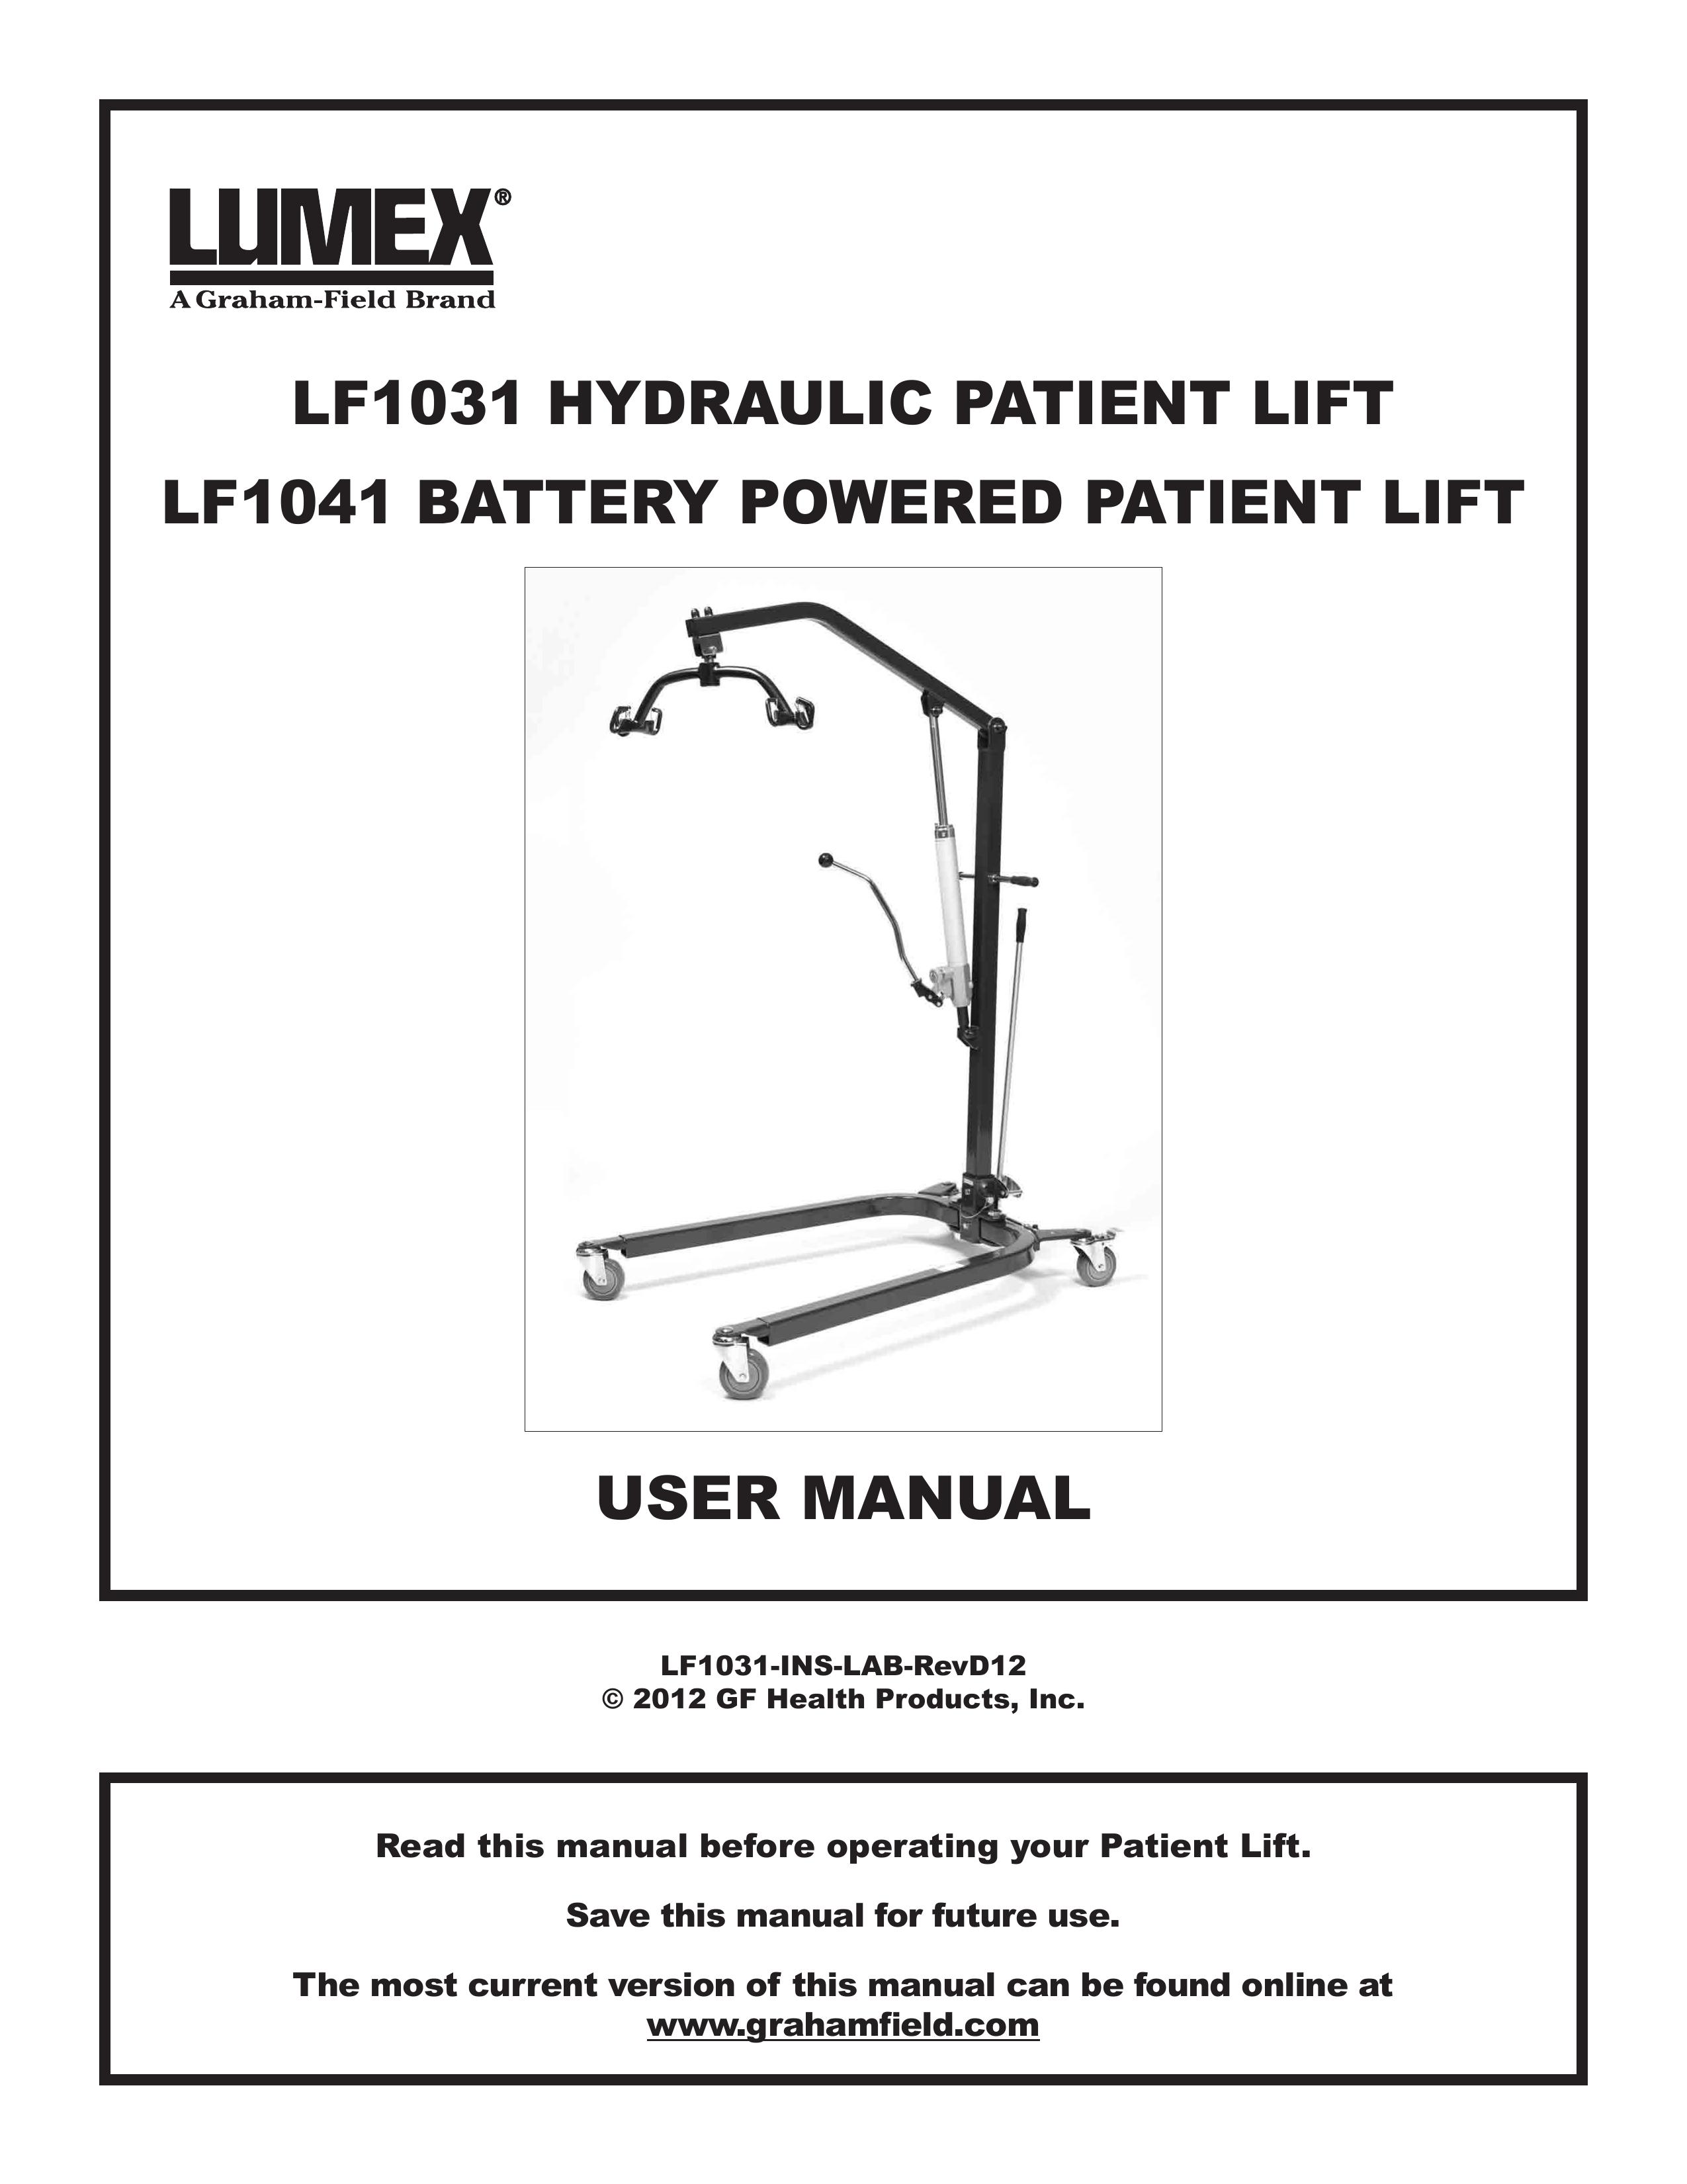 Graham Field lf 1031 Personal Lift User Manual